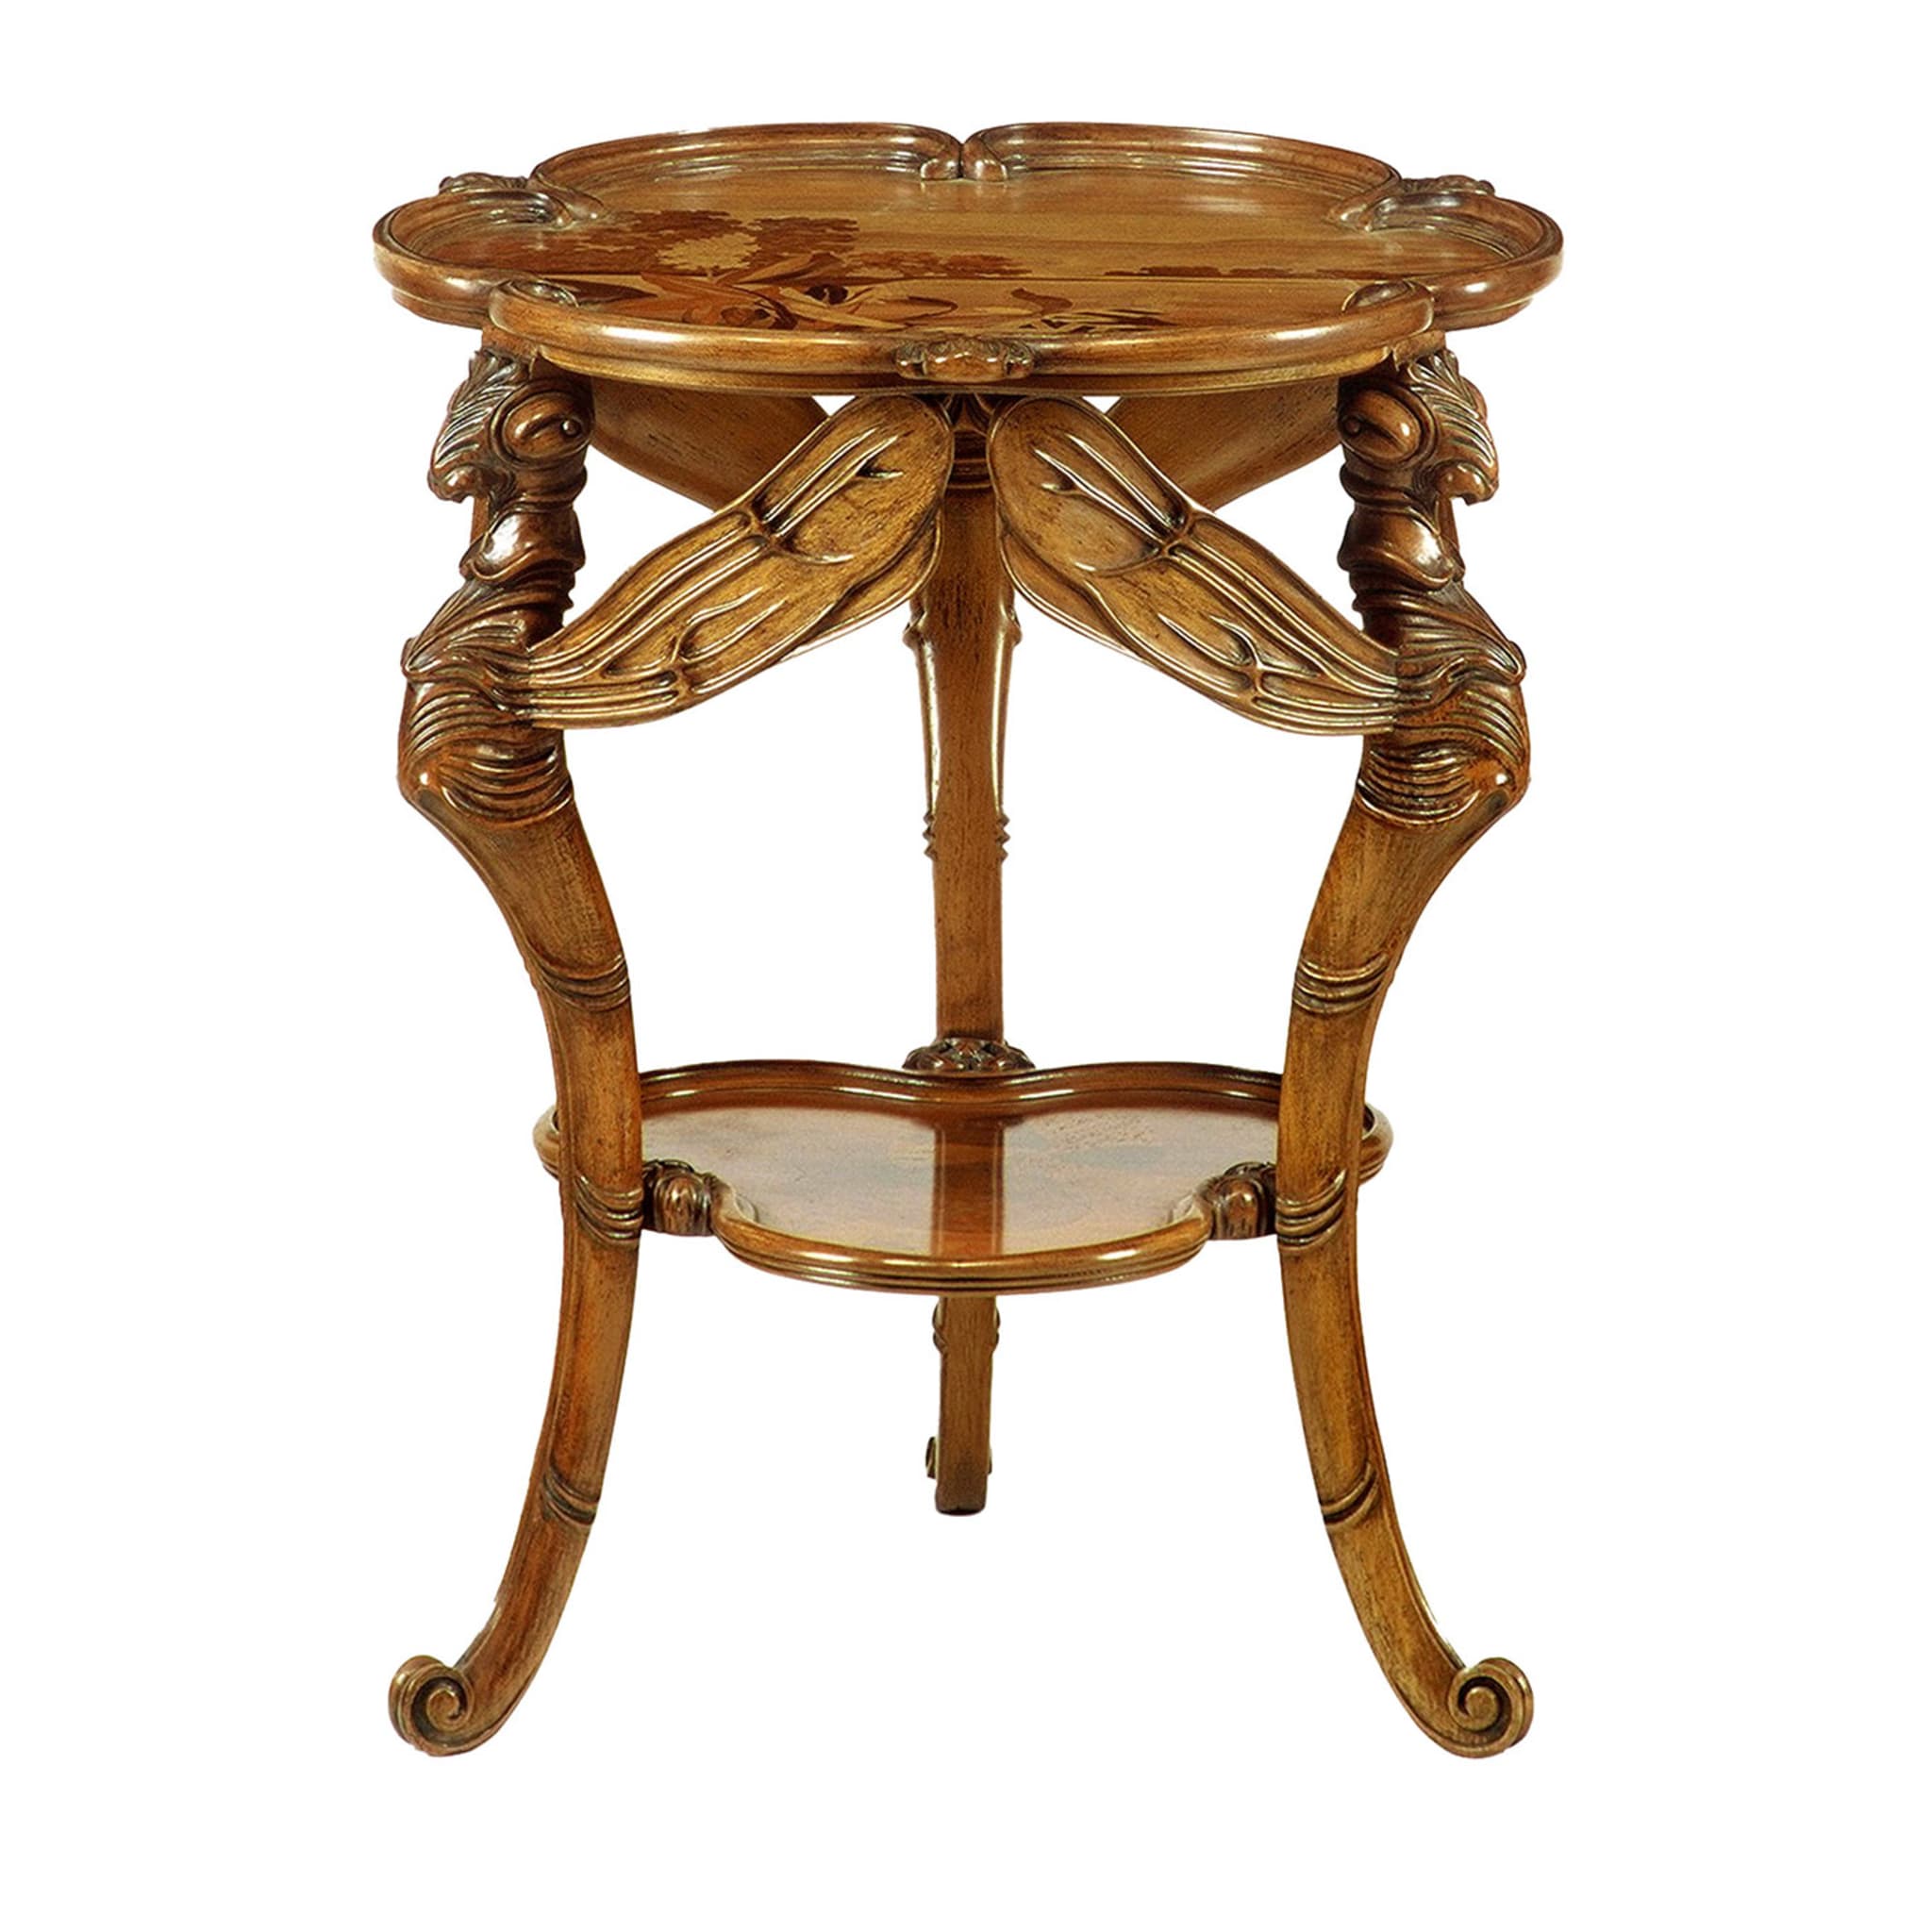 Tavolino zoomorfo in stile Art Nouveau francese di Emile Gallè - Vista principale